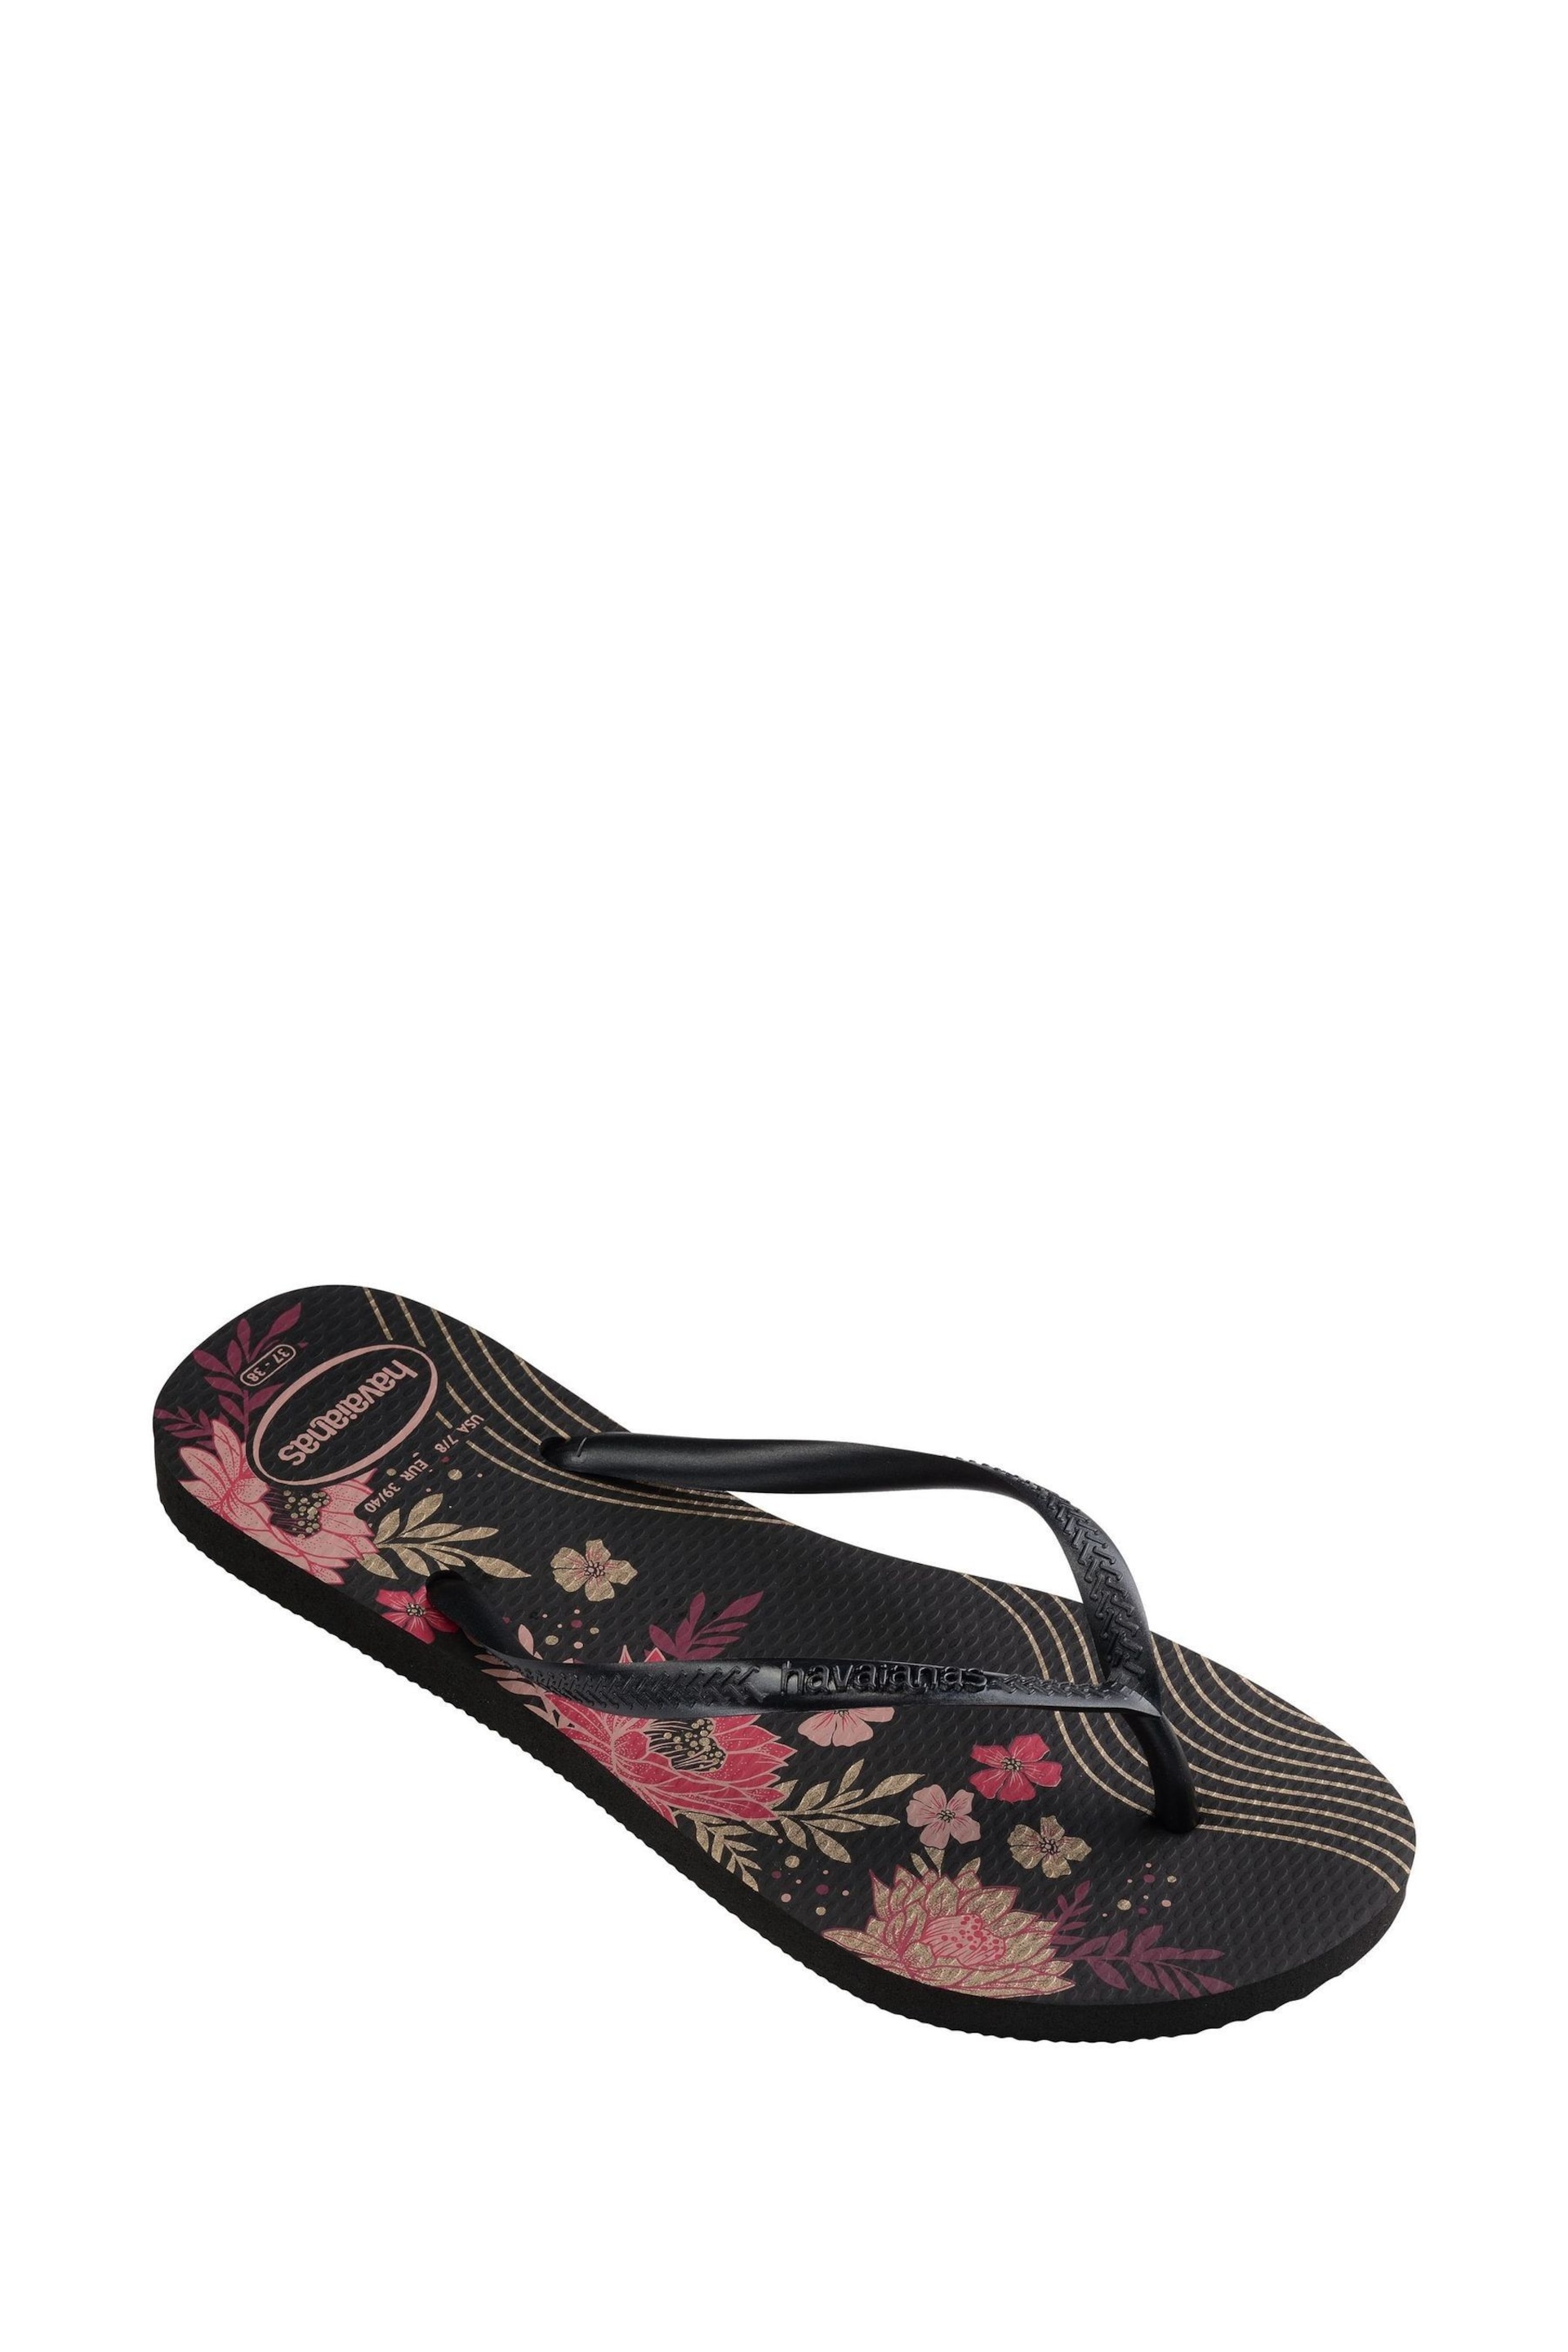 Havaianas Slim Black Organic Sandals - Image 2 of 6